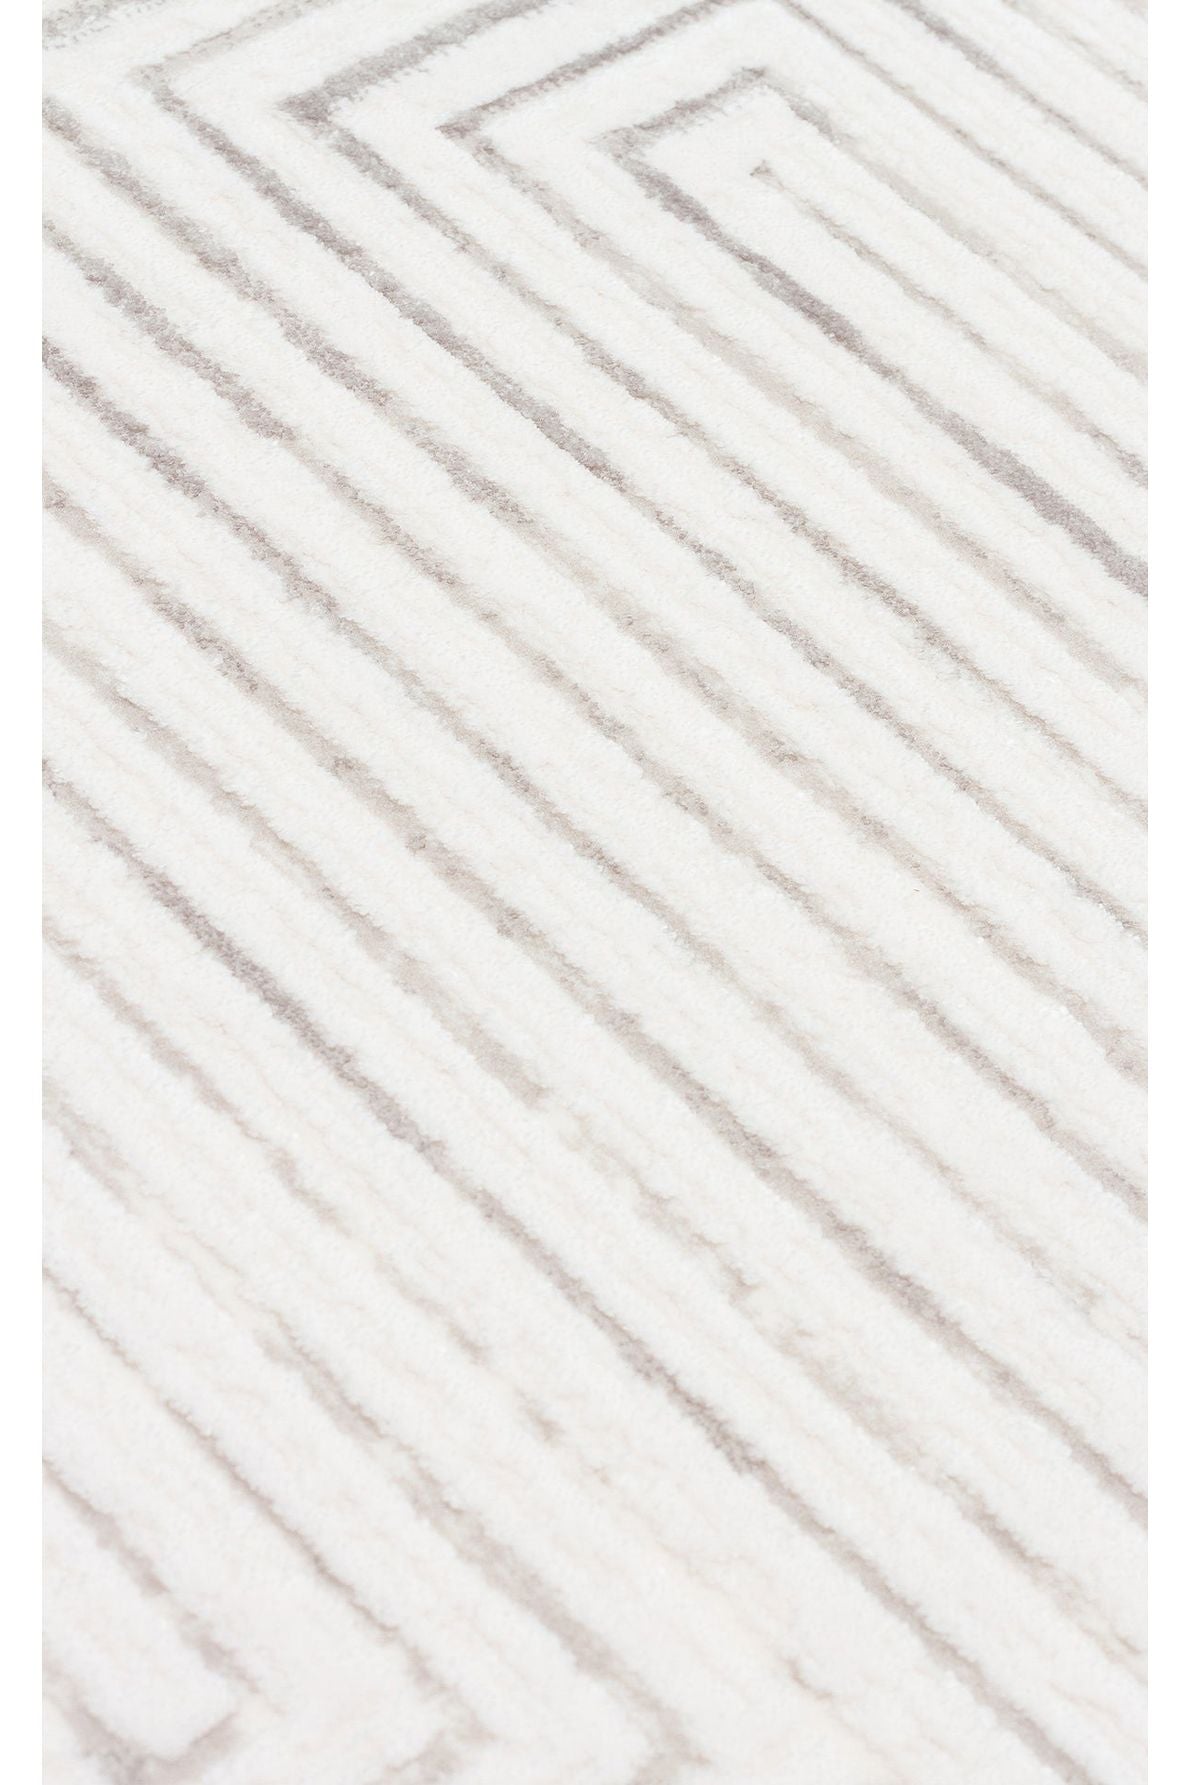 #Turkish_Carpets_Rugs# #Modern_Carpets# #Abrash_Carpets#Modern Carpets Made With AcrylicLky 02 Cream Grey